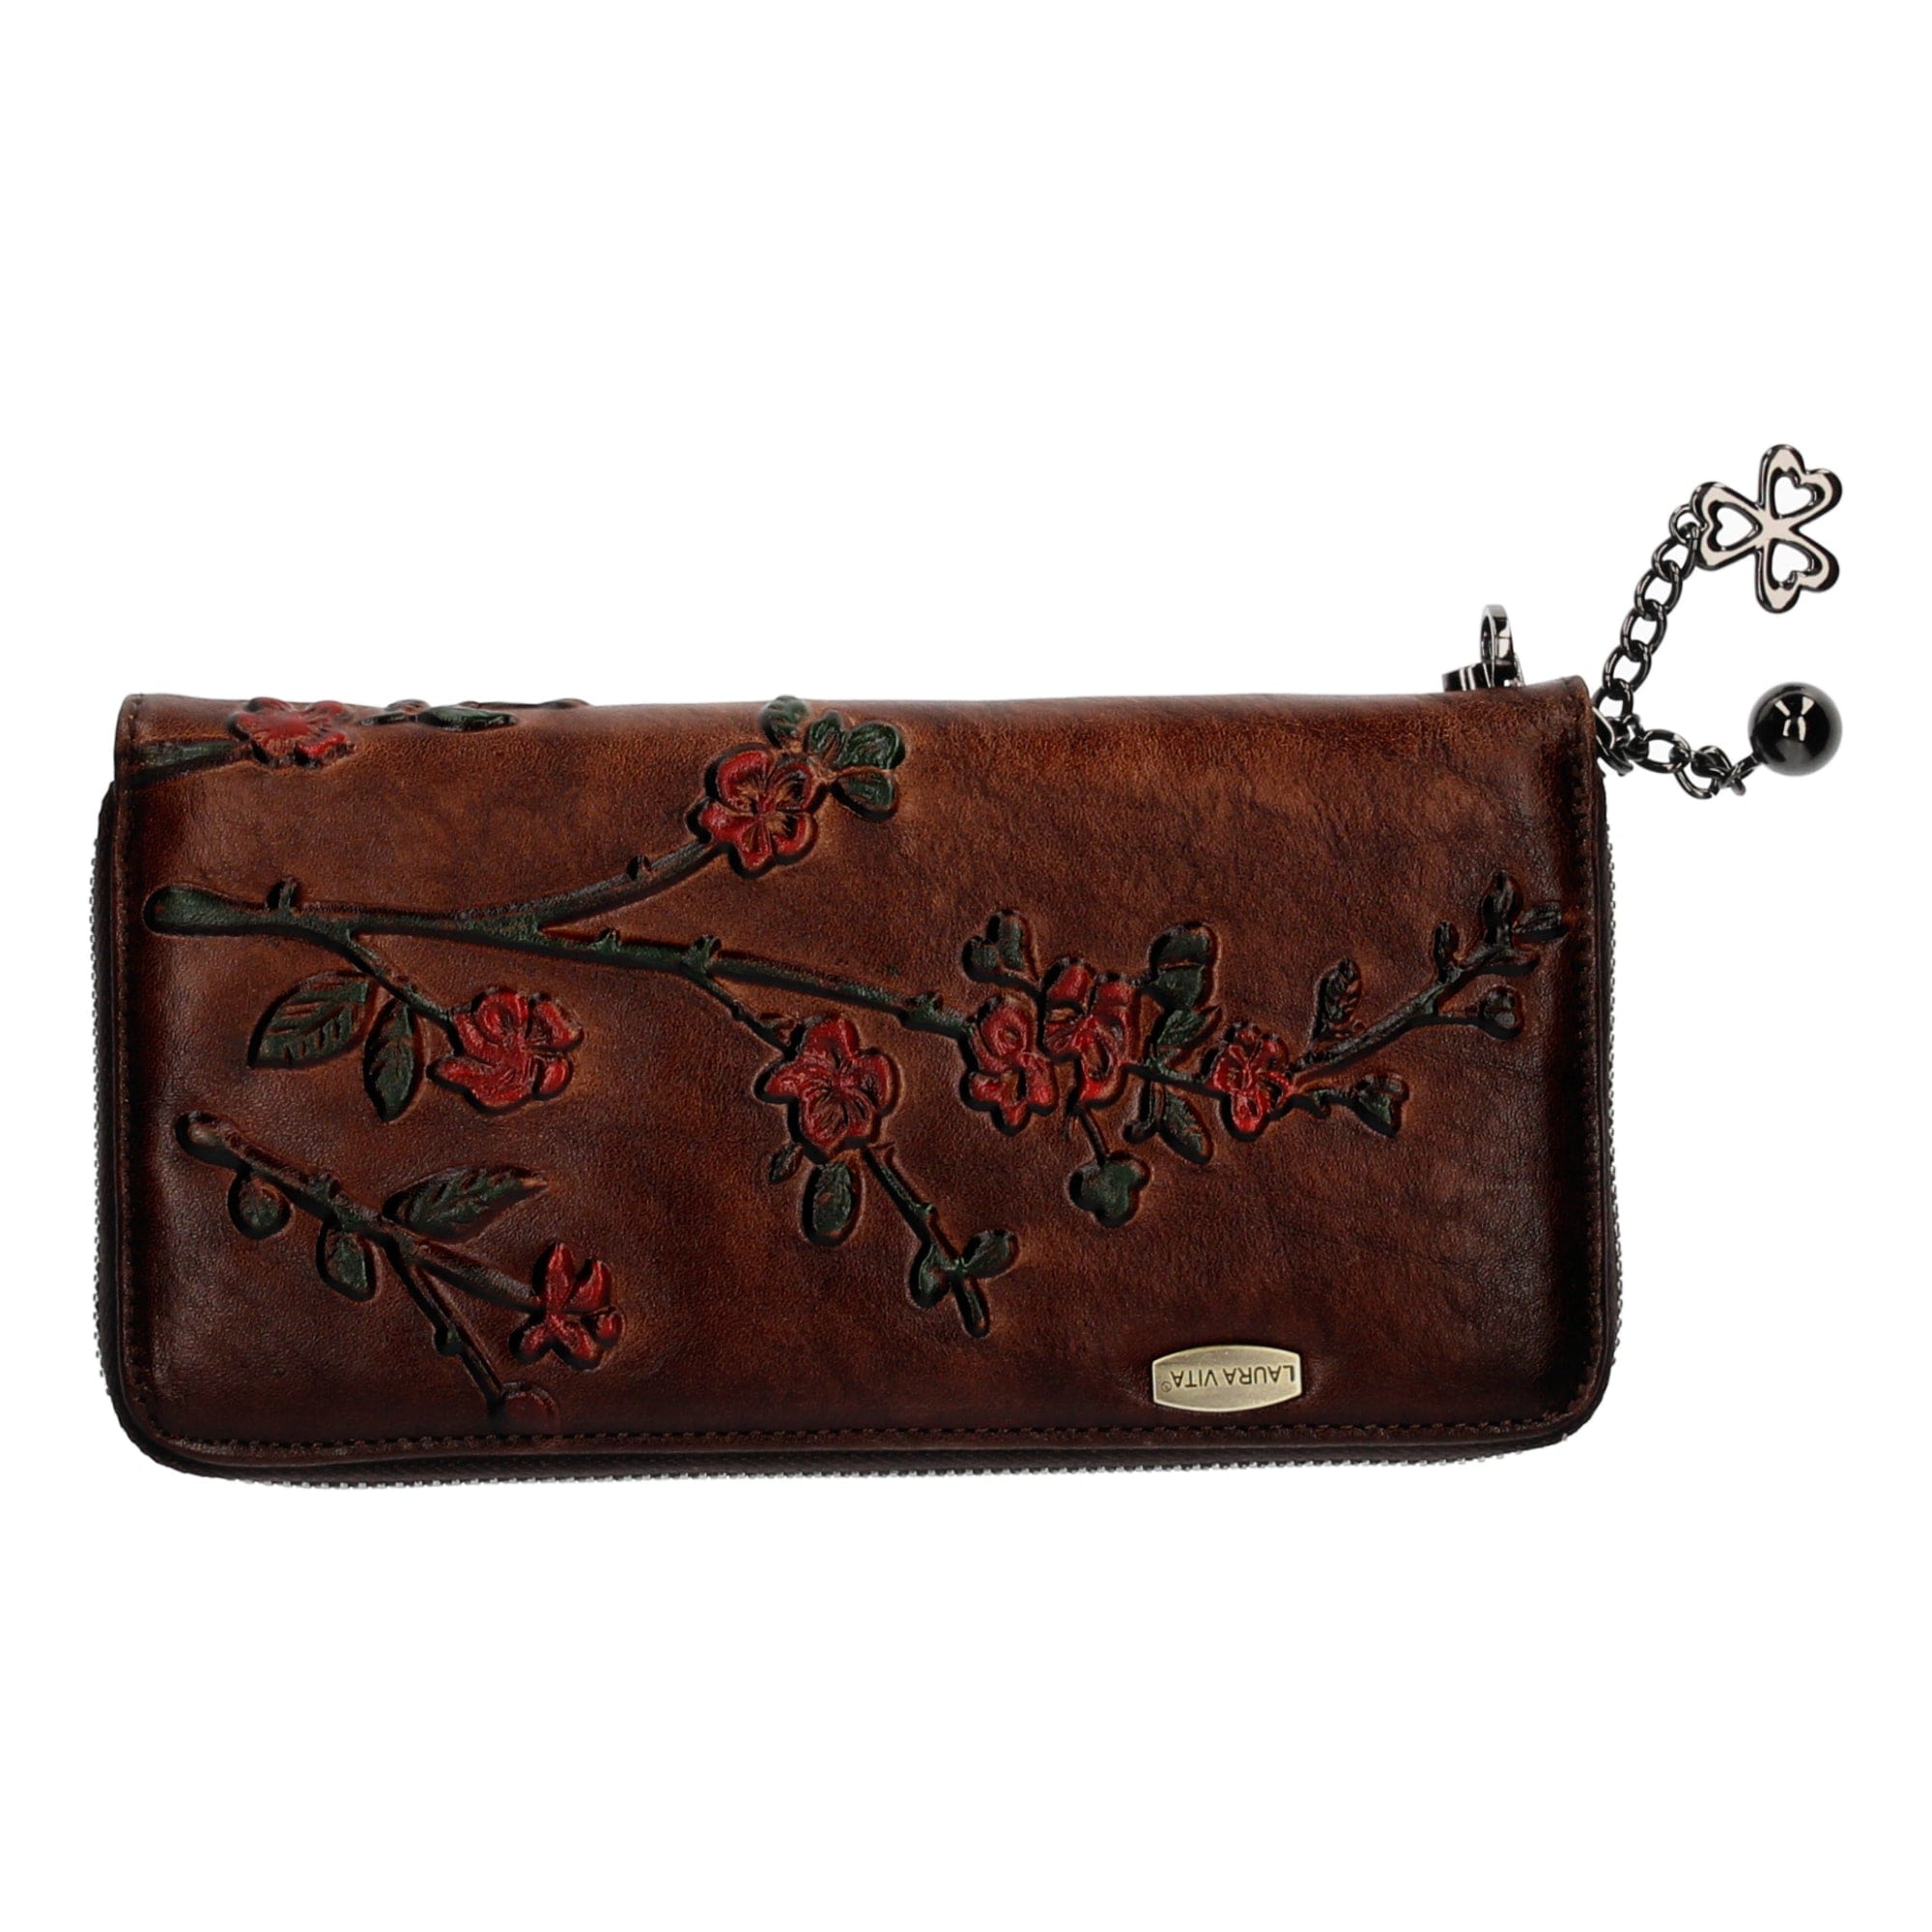 Natasha wallet - Brown - Small leather goods